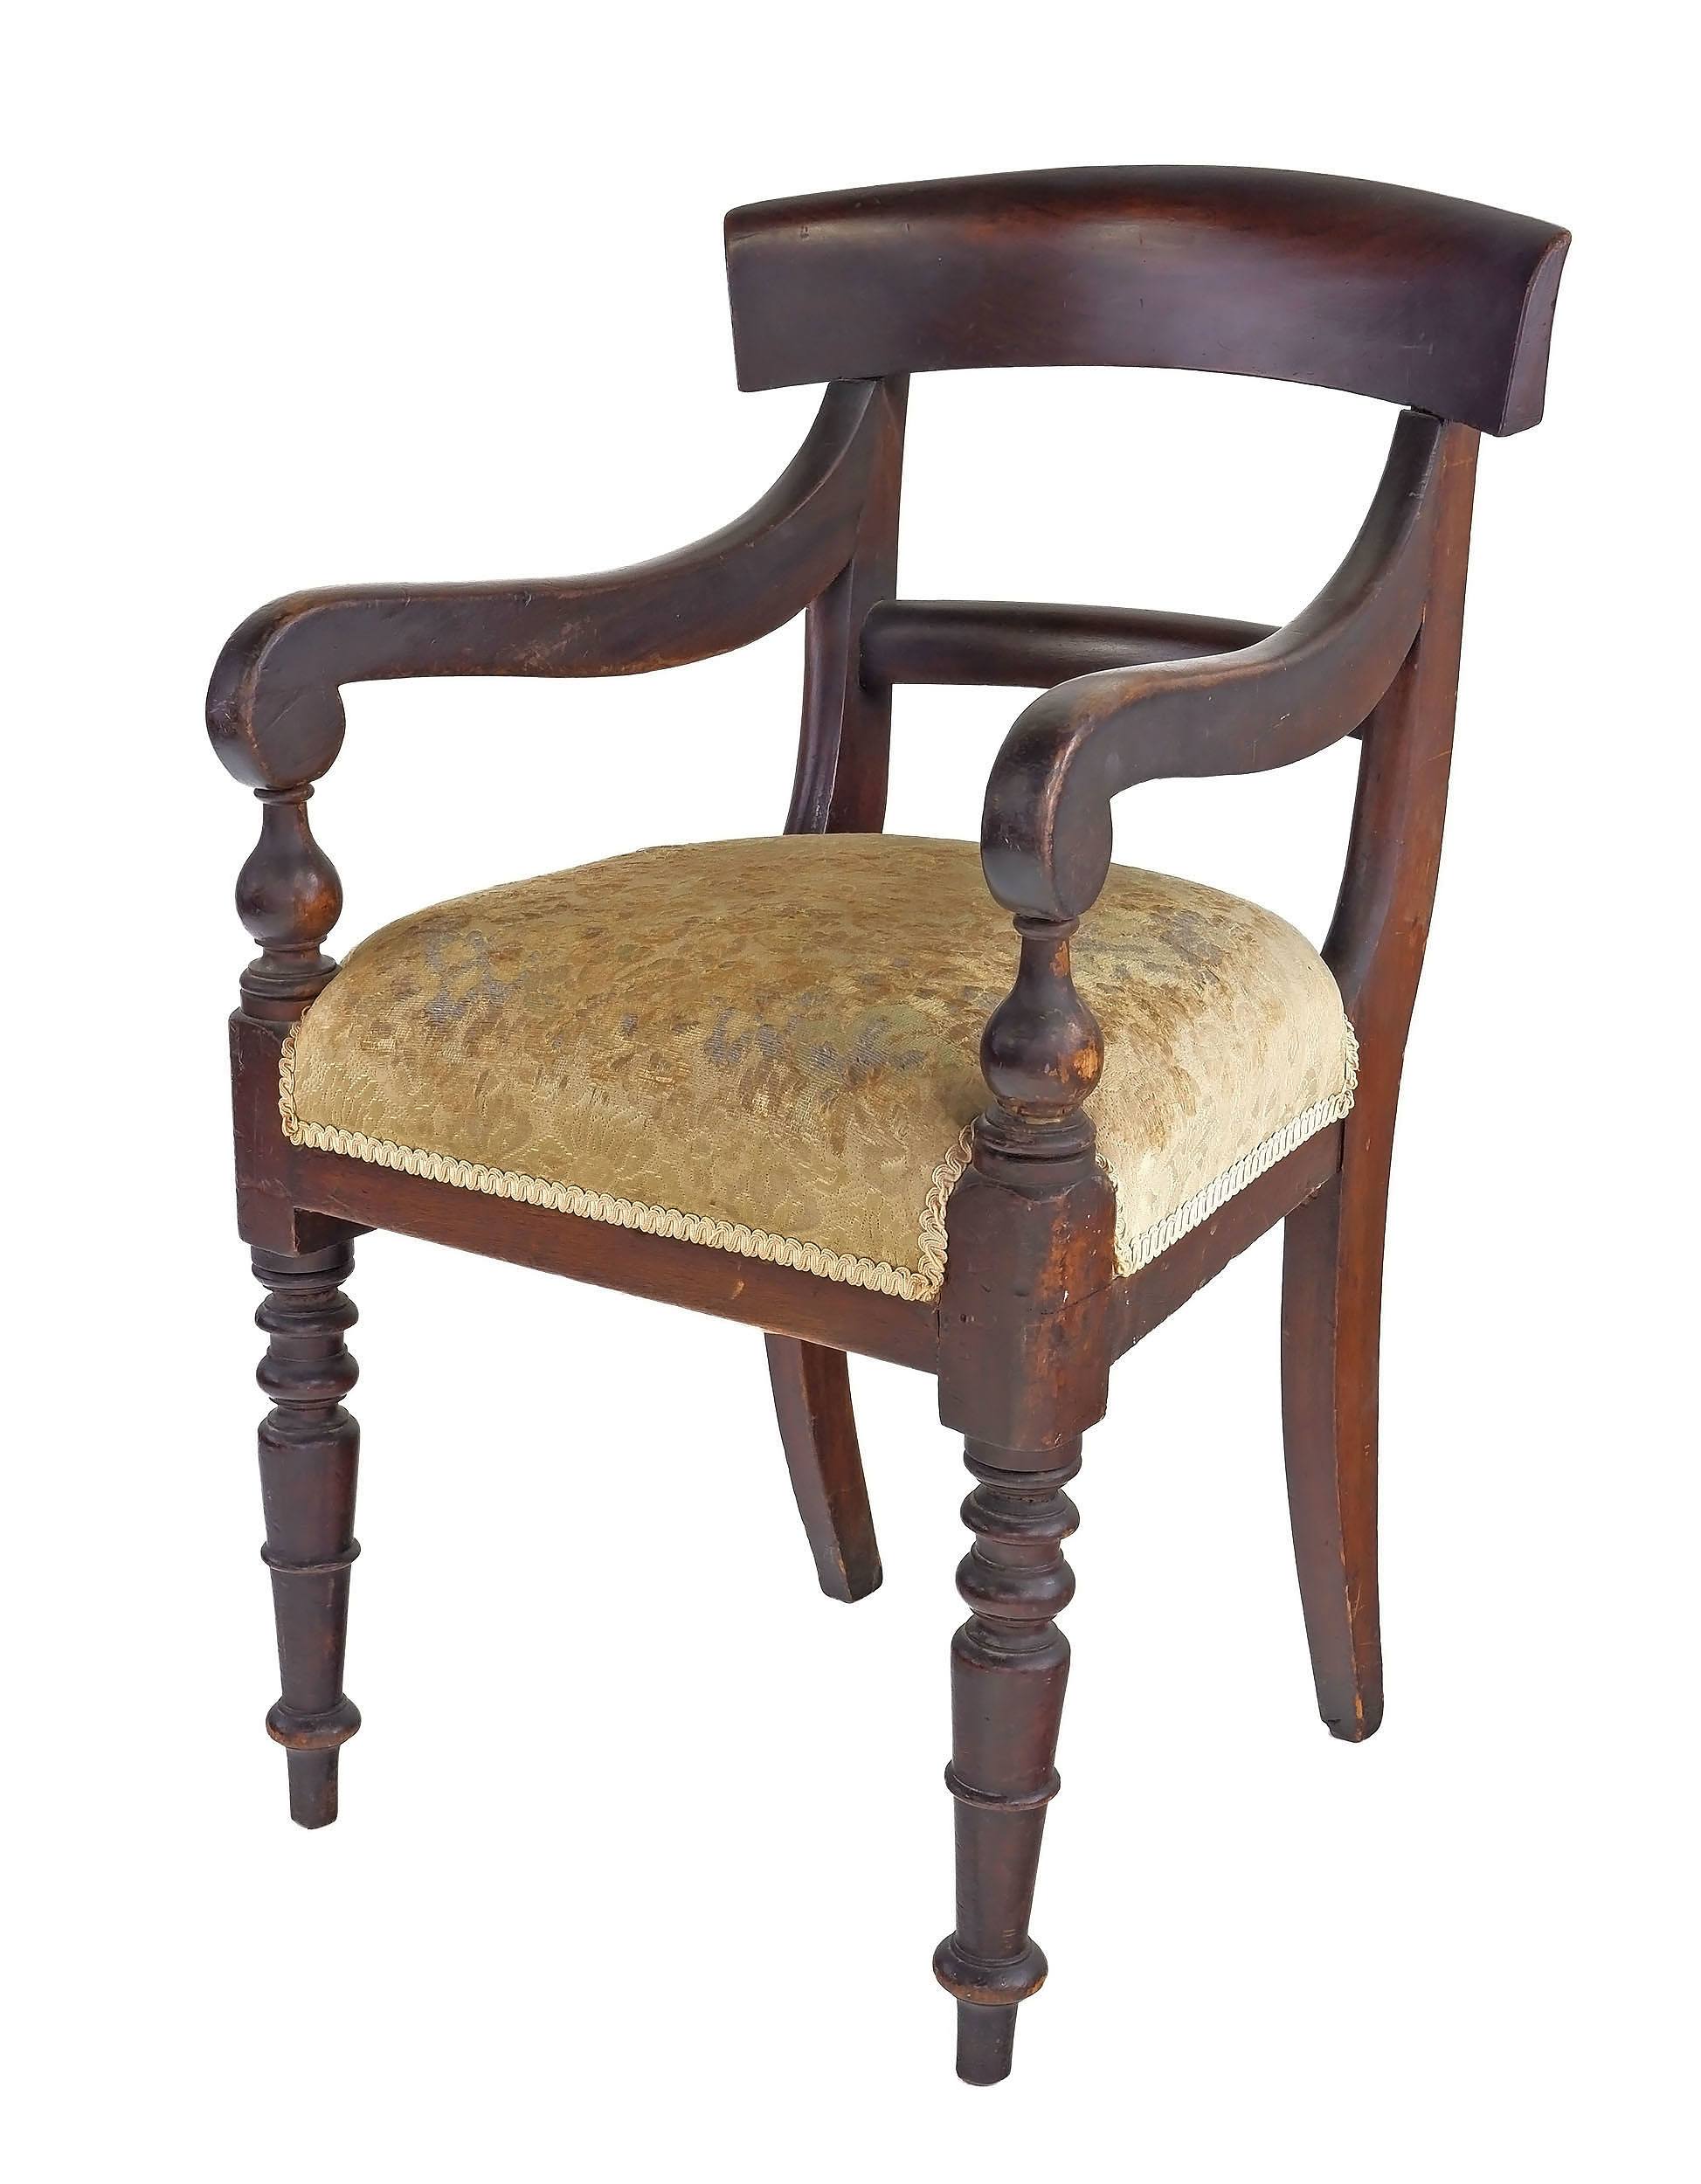 'Australian Cedar Scrolled Arm Carver Chair, 3rd Quarter of the 19th Century'